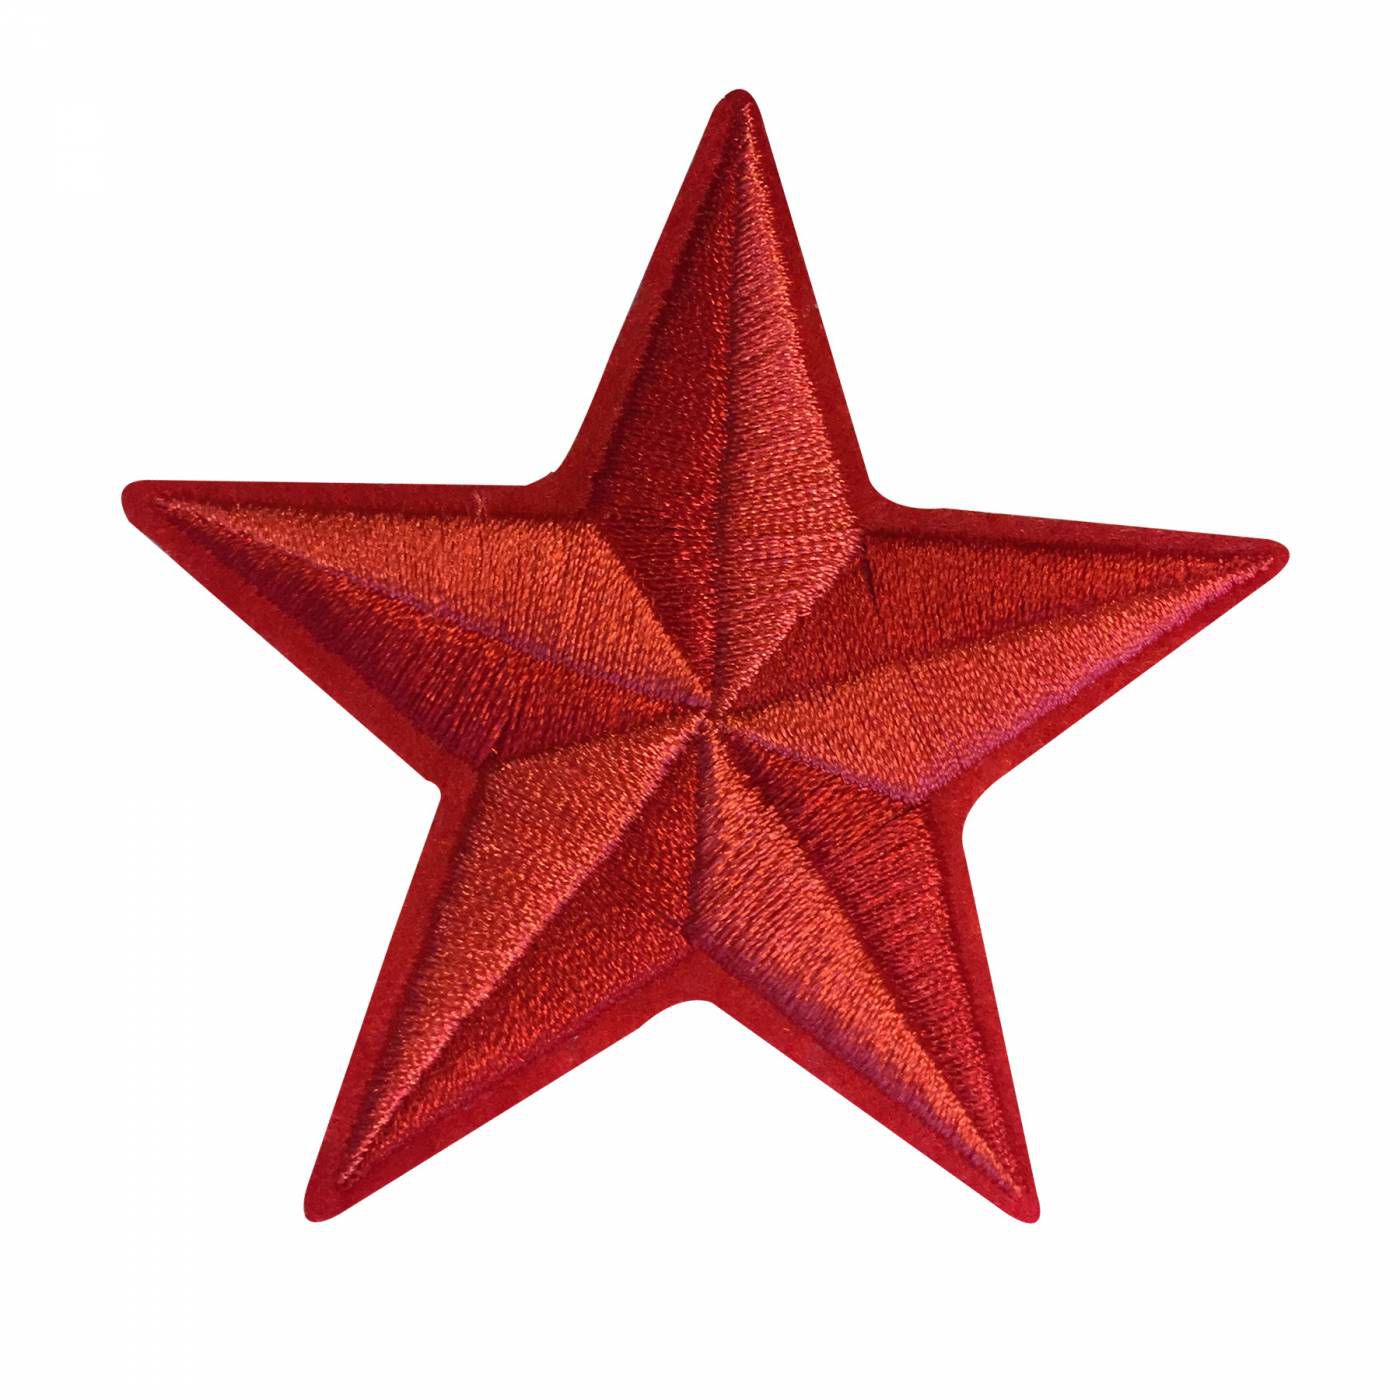 Kielegat embleem - Rode ster